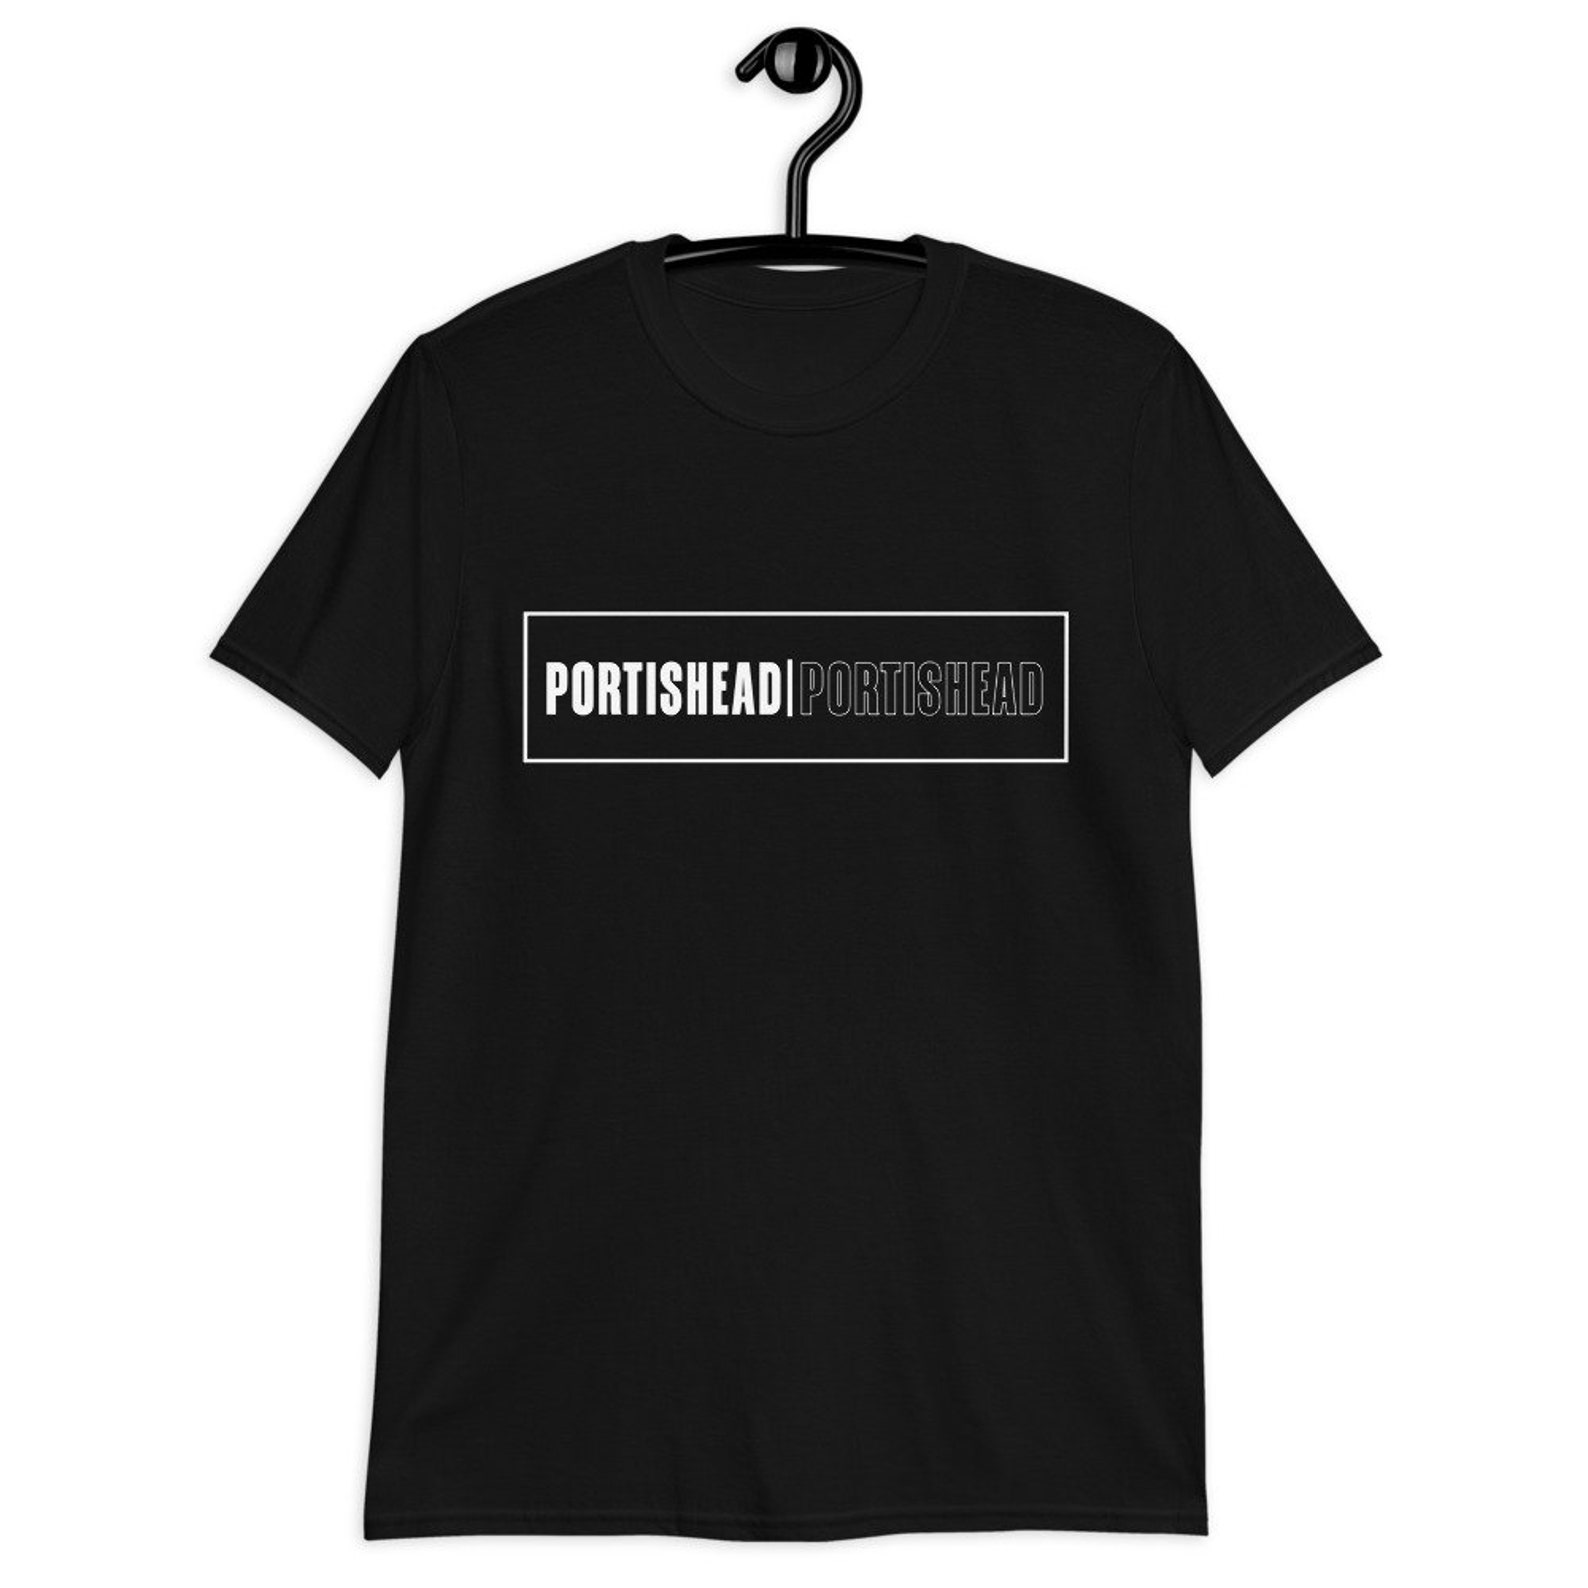 Portishead Portishead T-Shirt | Etsy